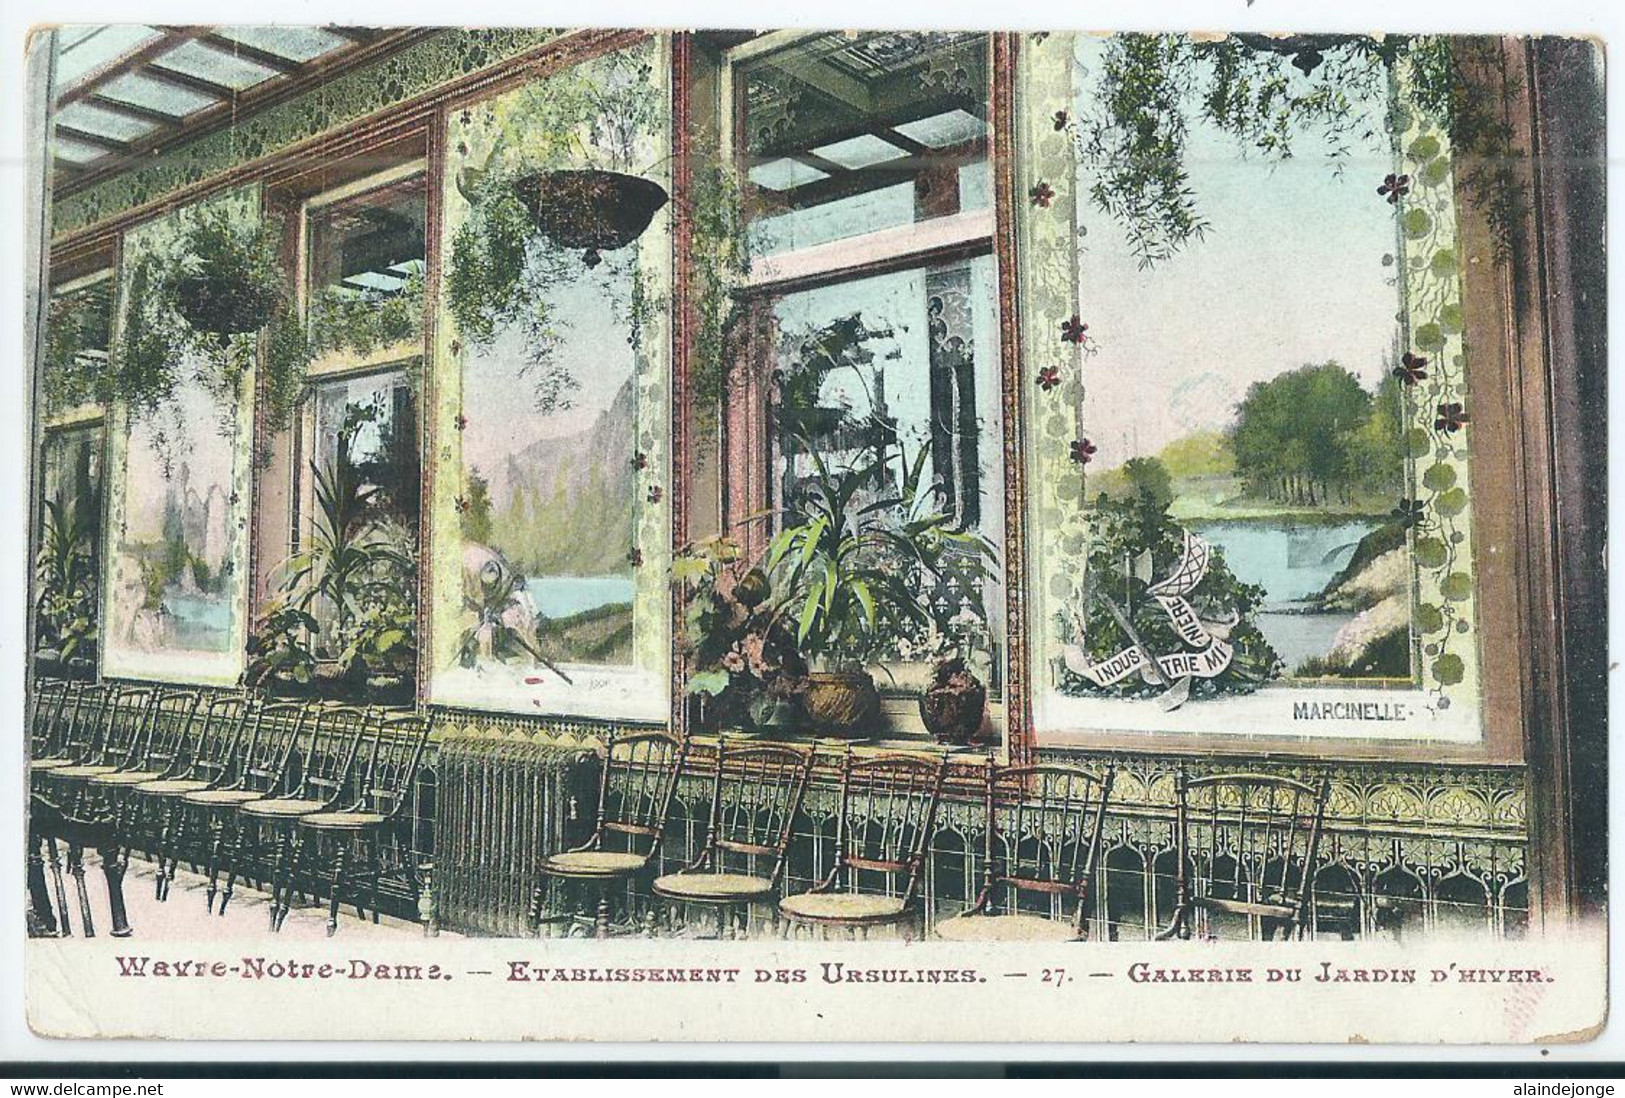 Wavre-Notre-Dame - Onze-Lieve-Vrouw-Waver - Institut Des Ursulines - Galerie Du Jardin D'Hiver - 1903 - Sint-Katelijne-Waver